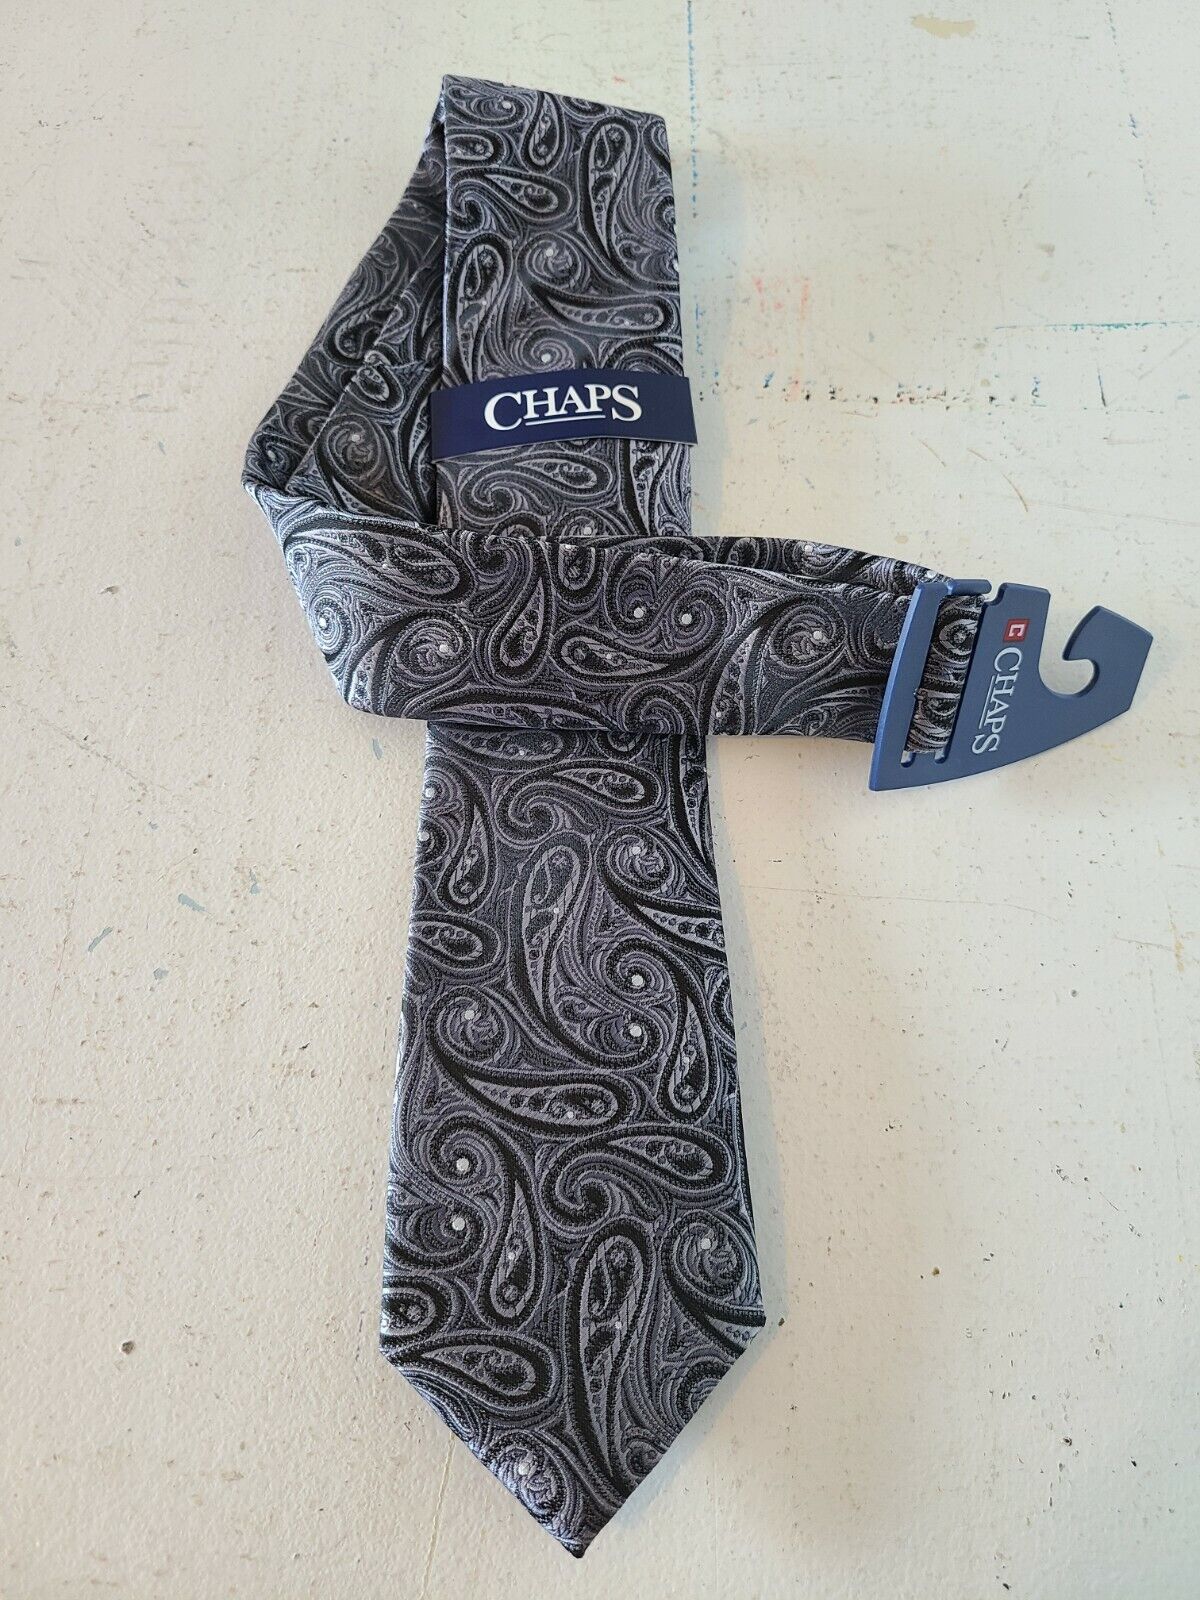 New Chaps Ralph Lauren Tie Black Gray Luxury Paisley Woven Designer Jacquard Men